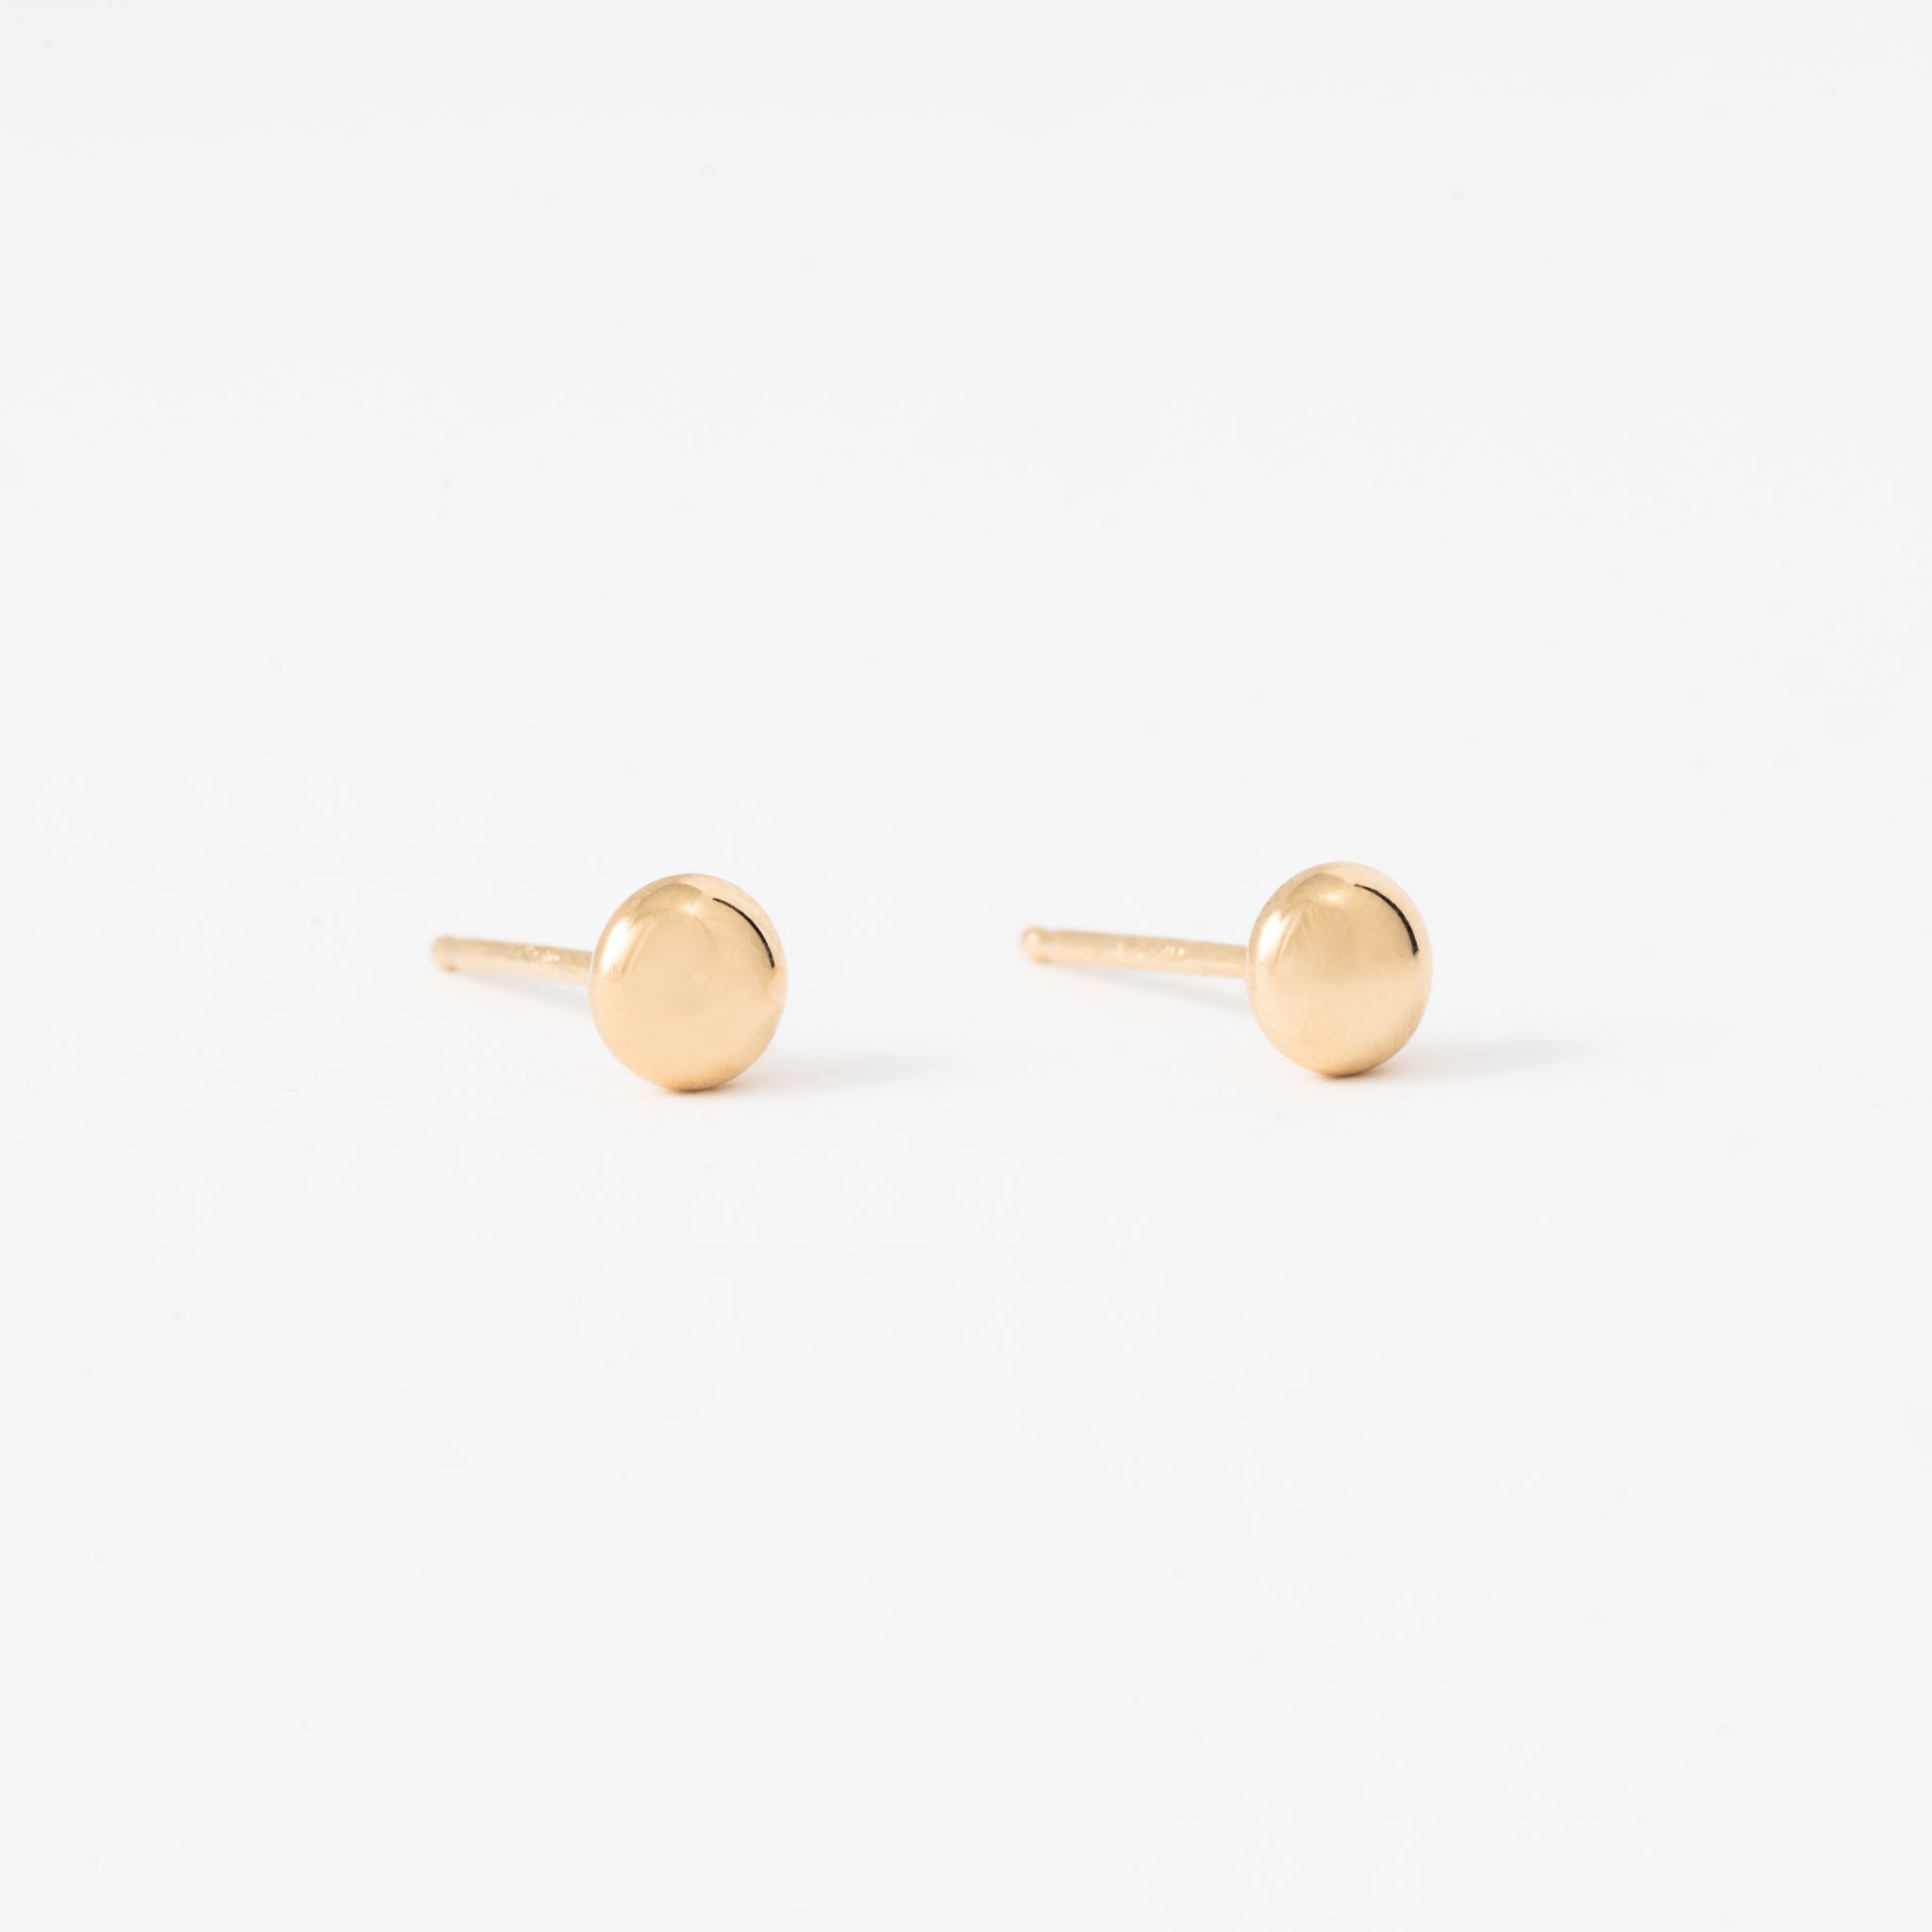 Buy Simple Gold Earrings, 14k Gold Stud Earrings, Traditional Croatian  Ethnic Earrings, Gold Filigree Studs, Dubrovnik Earrings Bridal Earrings  Online in India - Etsy